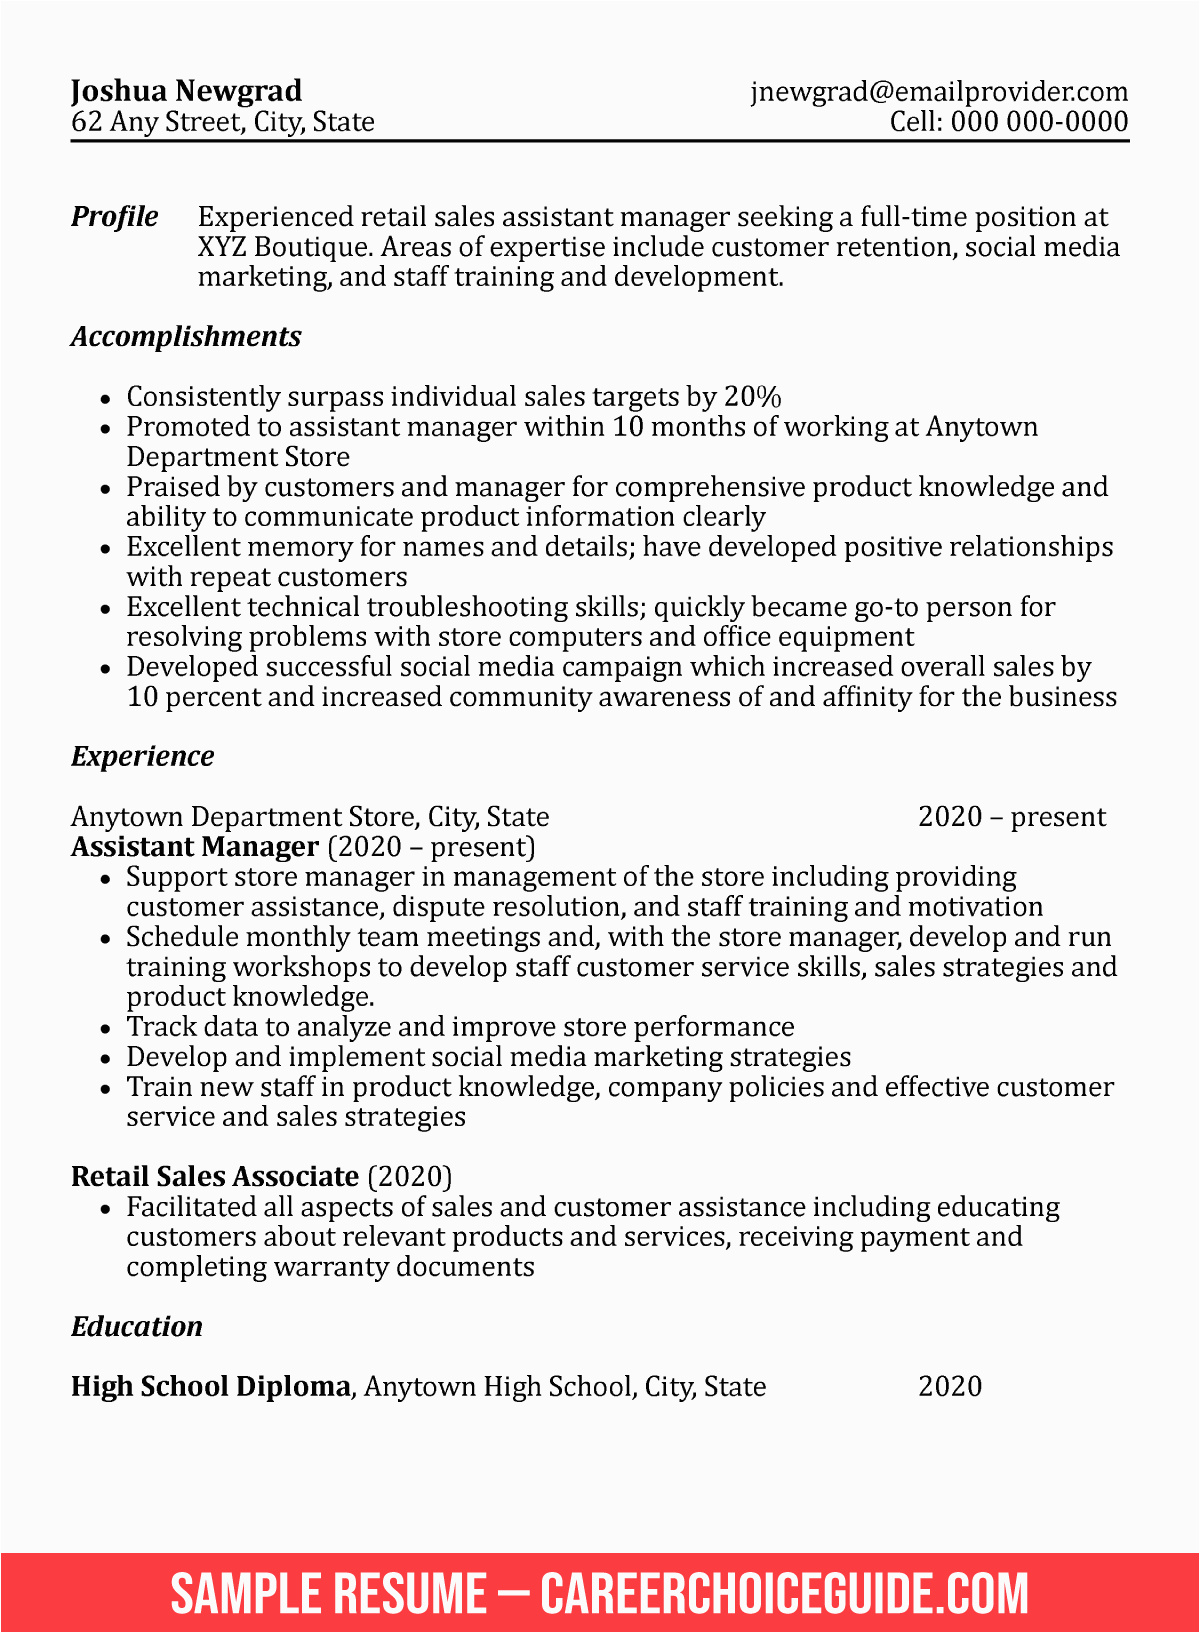 Sample Resume for New High School Graduate High School Graduate Resume Example